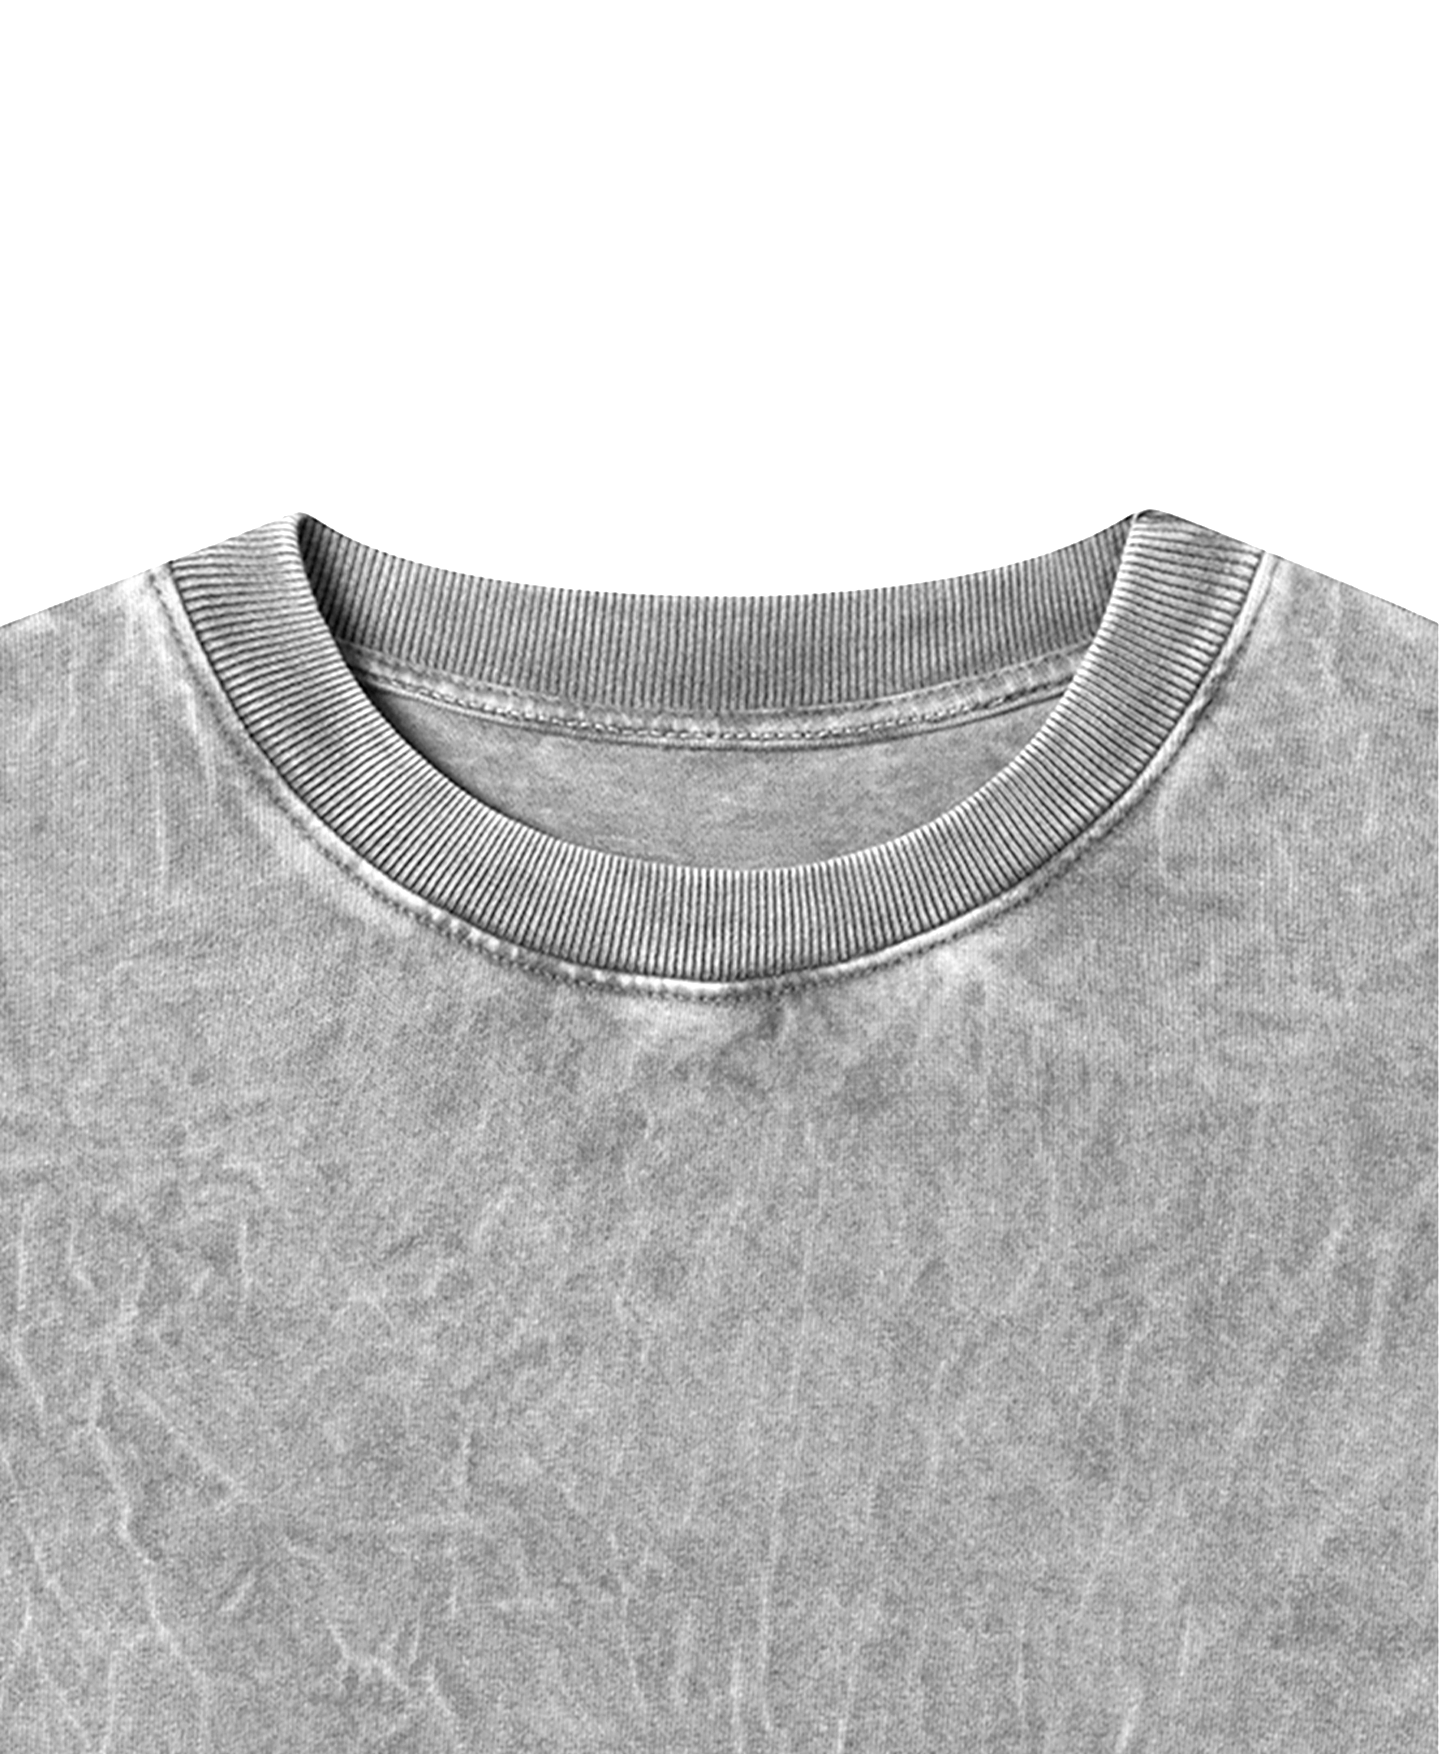 300 GSM 'Vintage Gray' T-Shirt